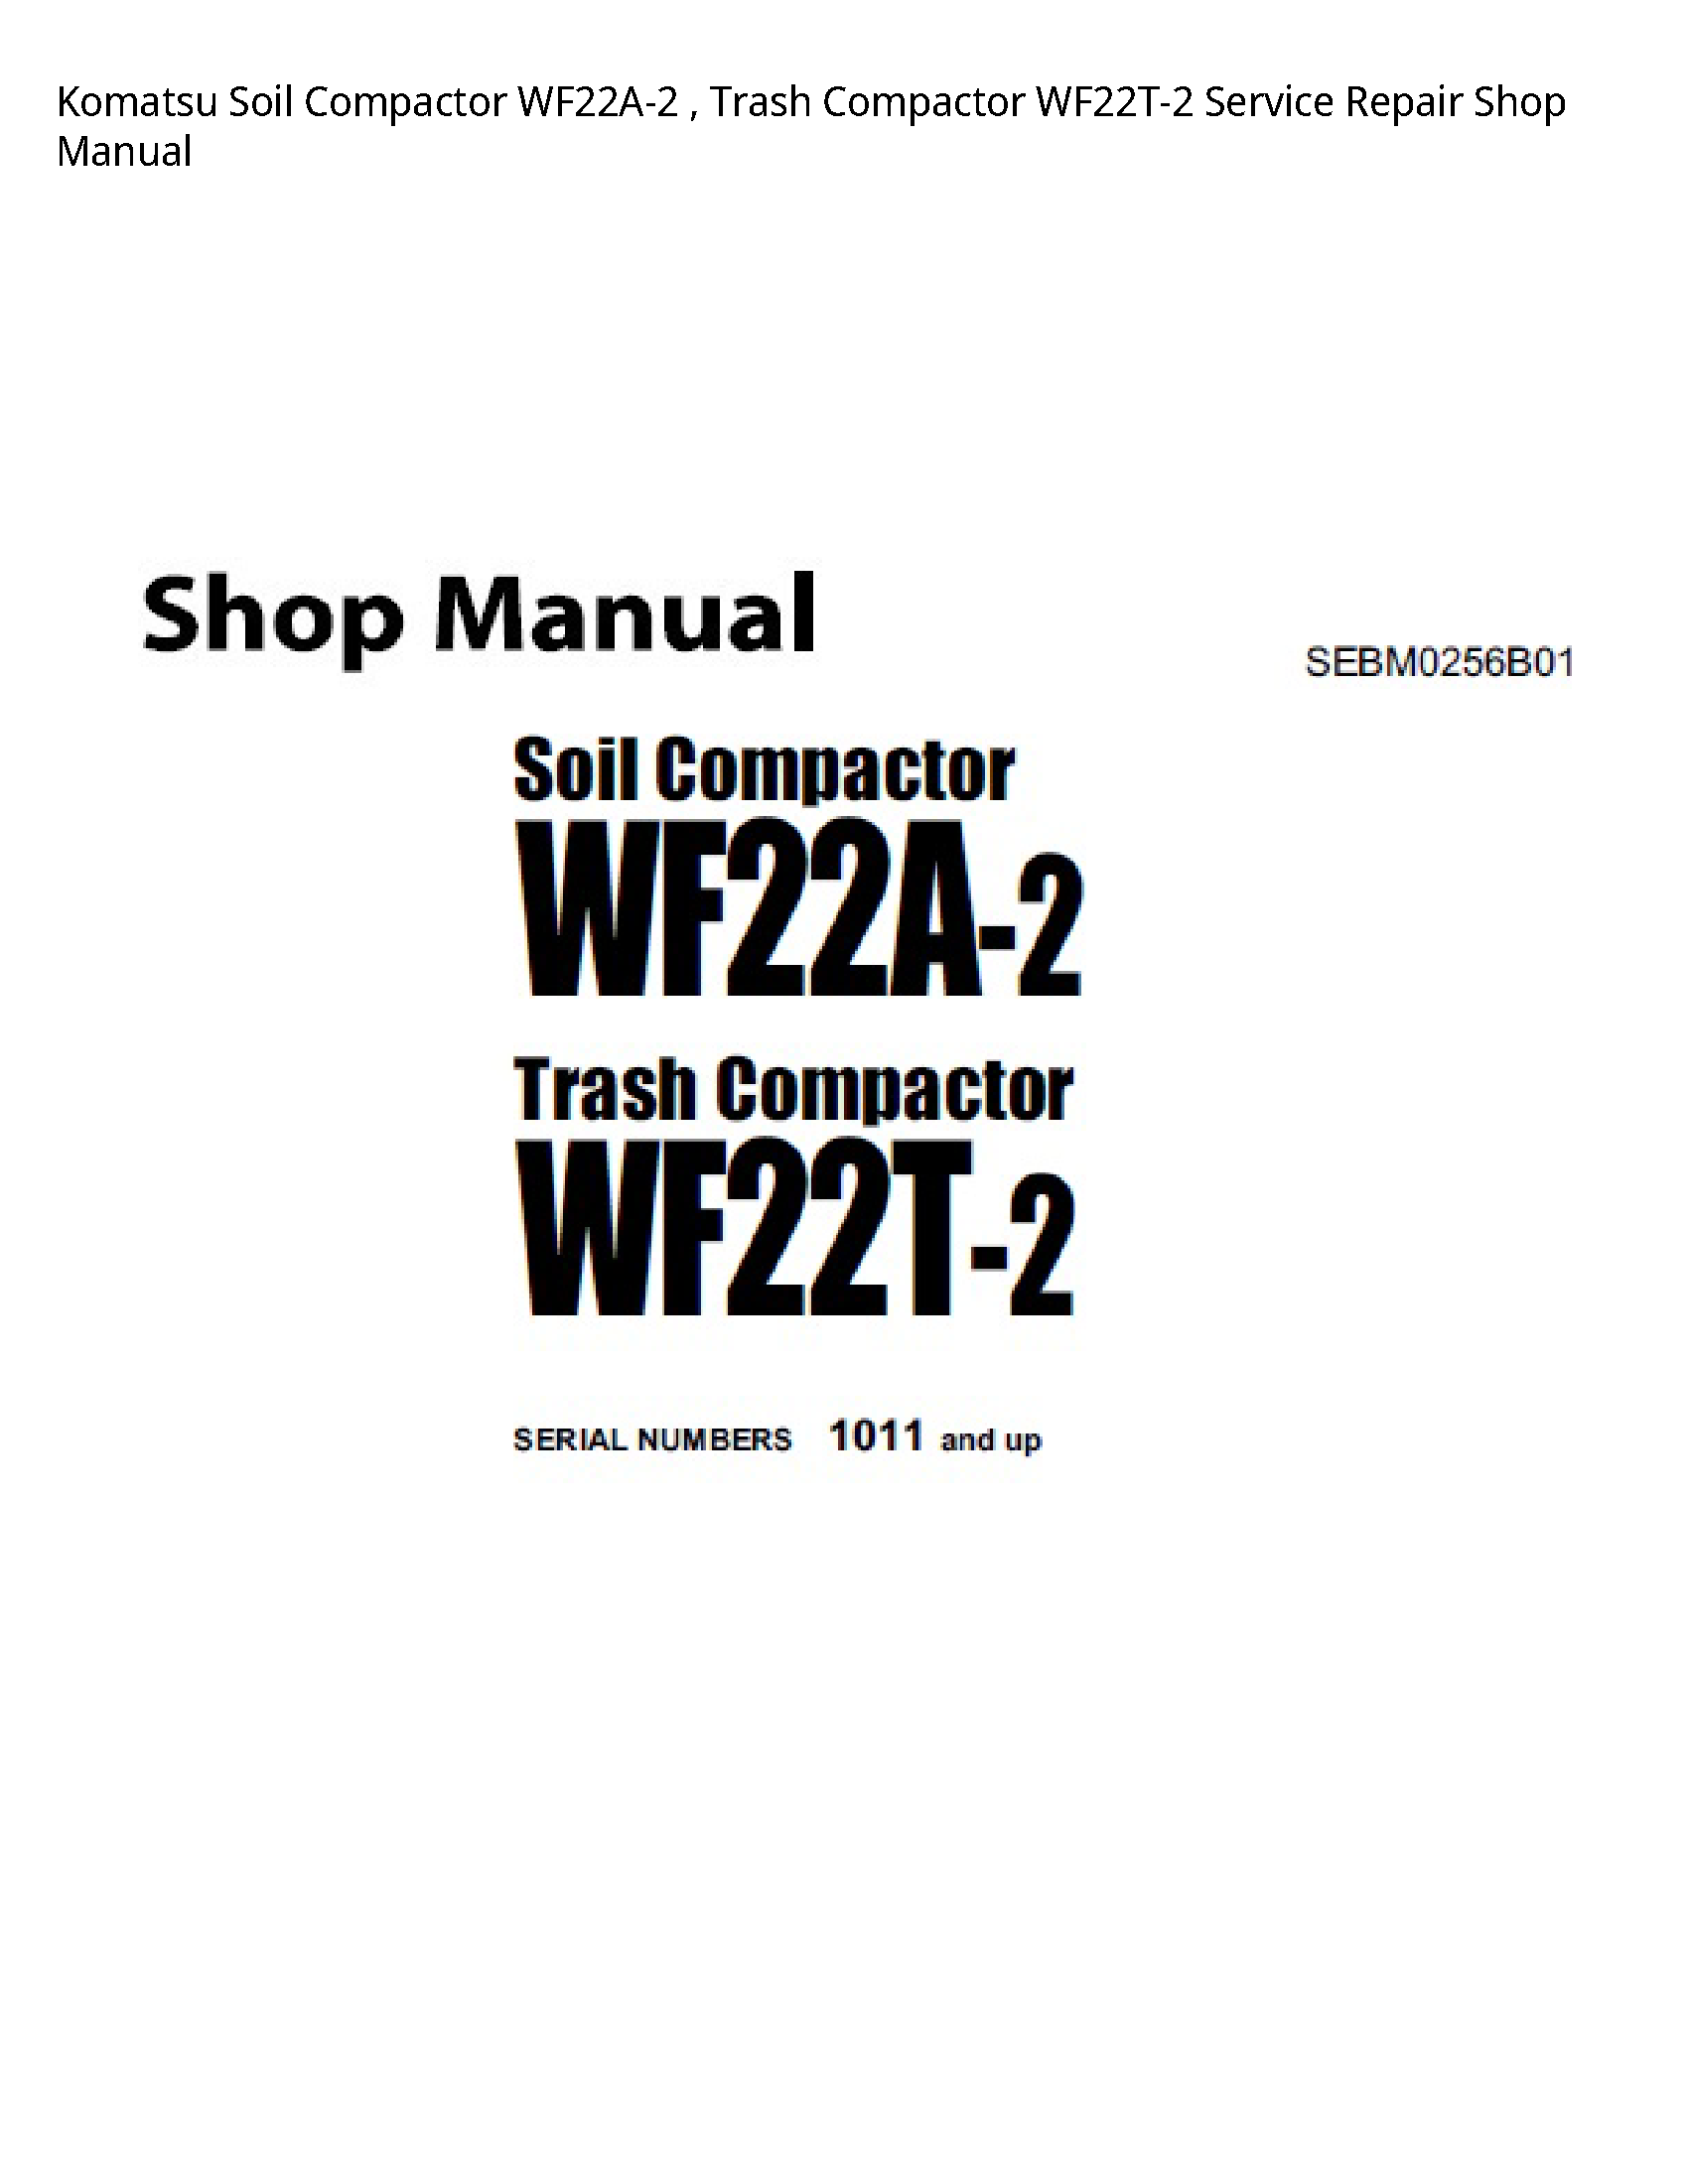 KOMATSU WF22A-2 Soil Compactor Trash Compactor manual